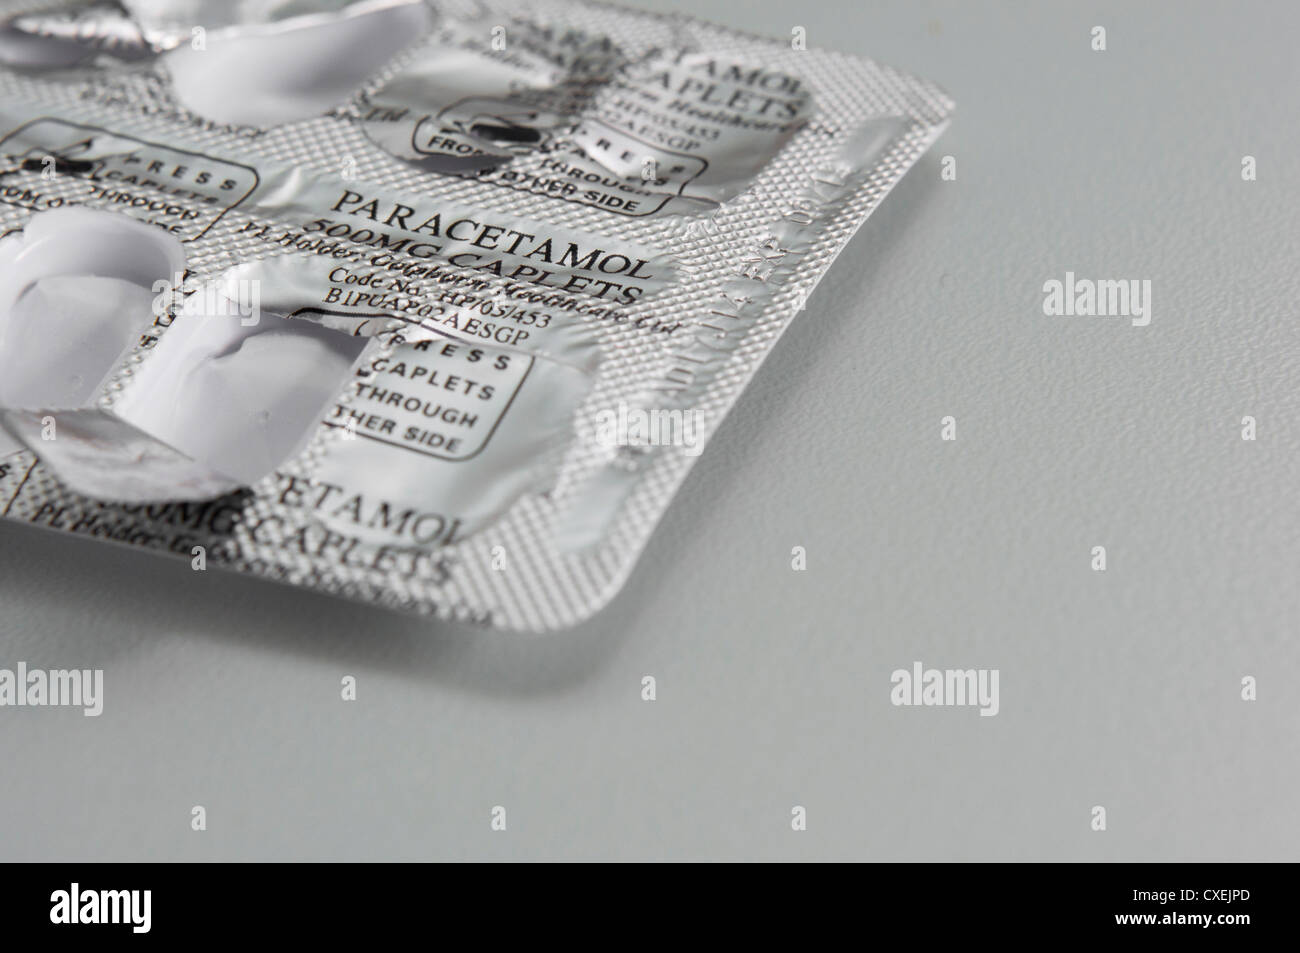 Paracetamol blister pack Stock Photo